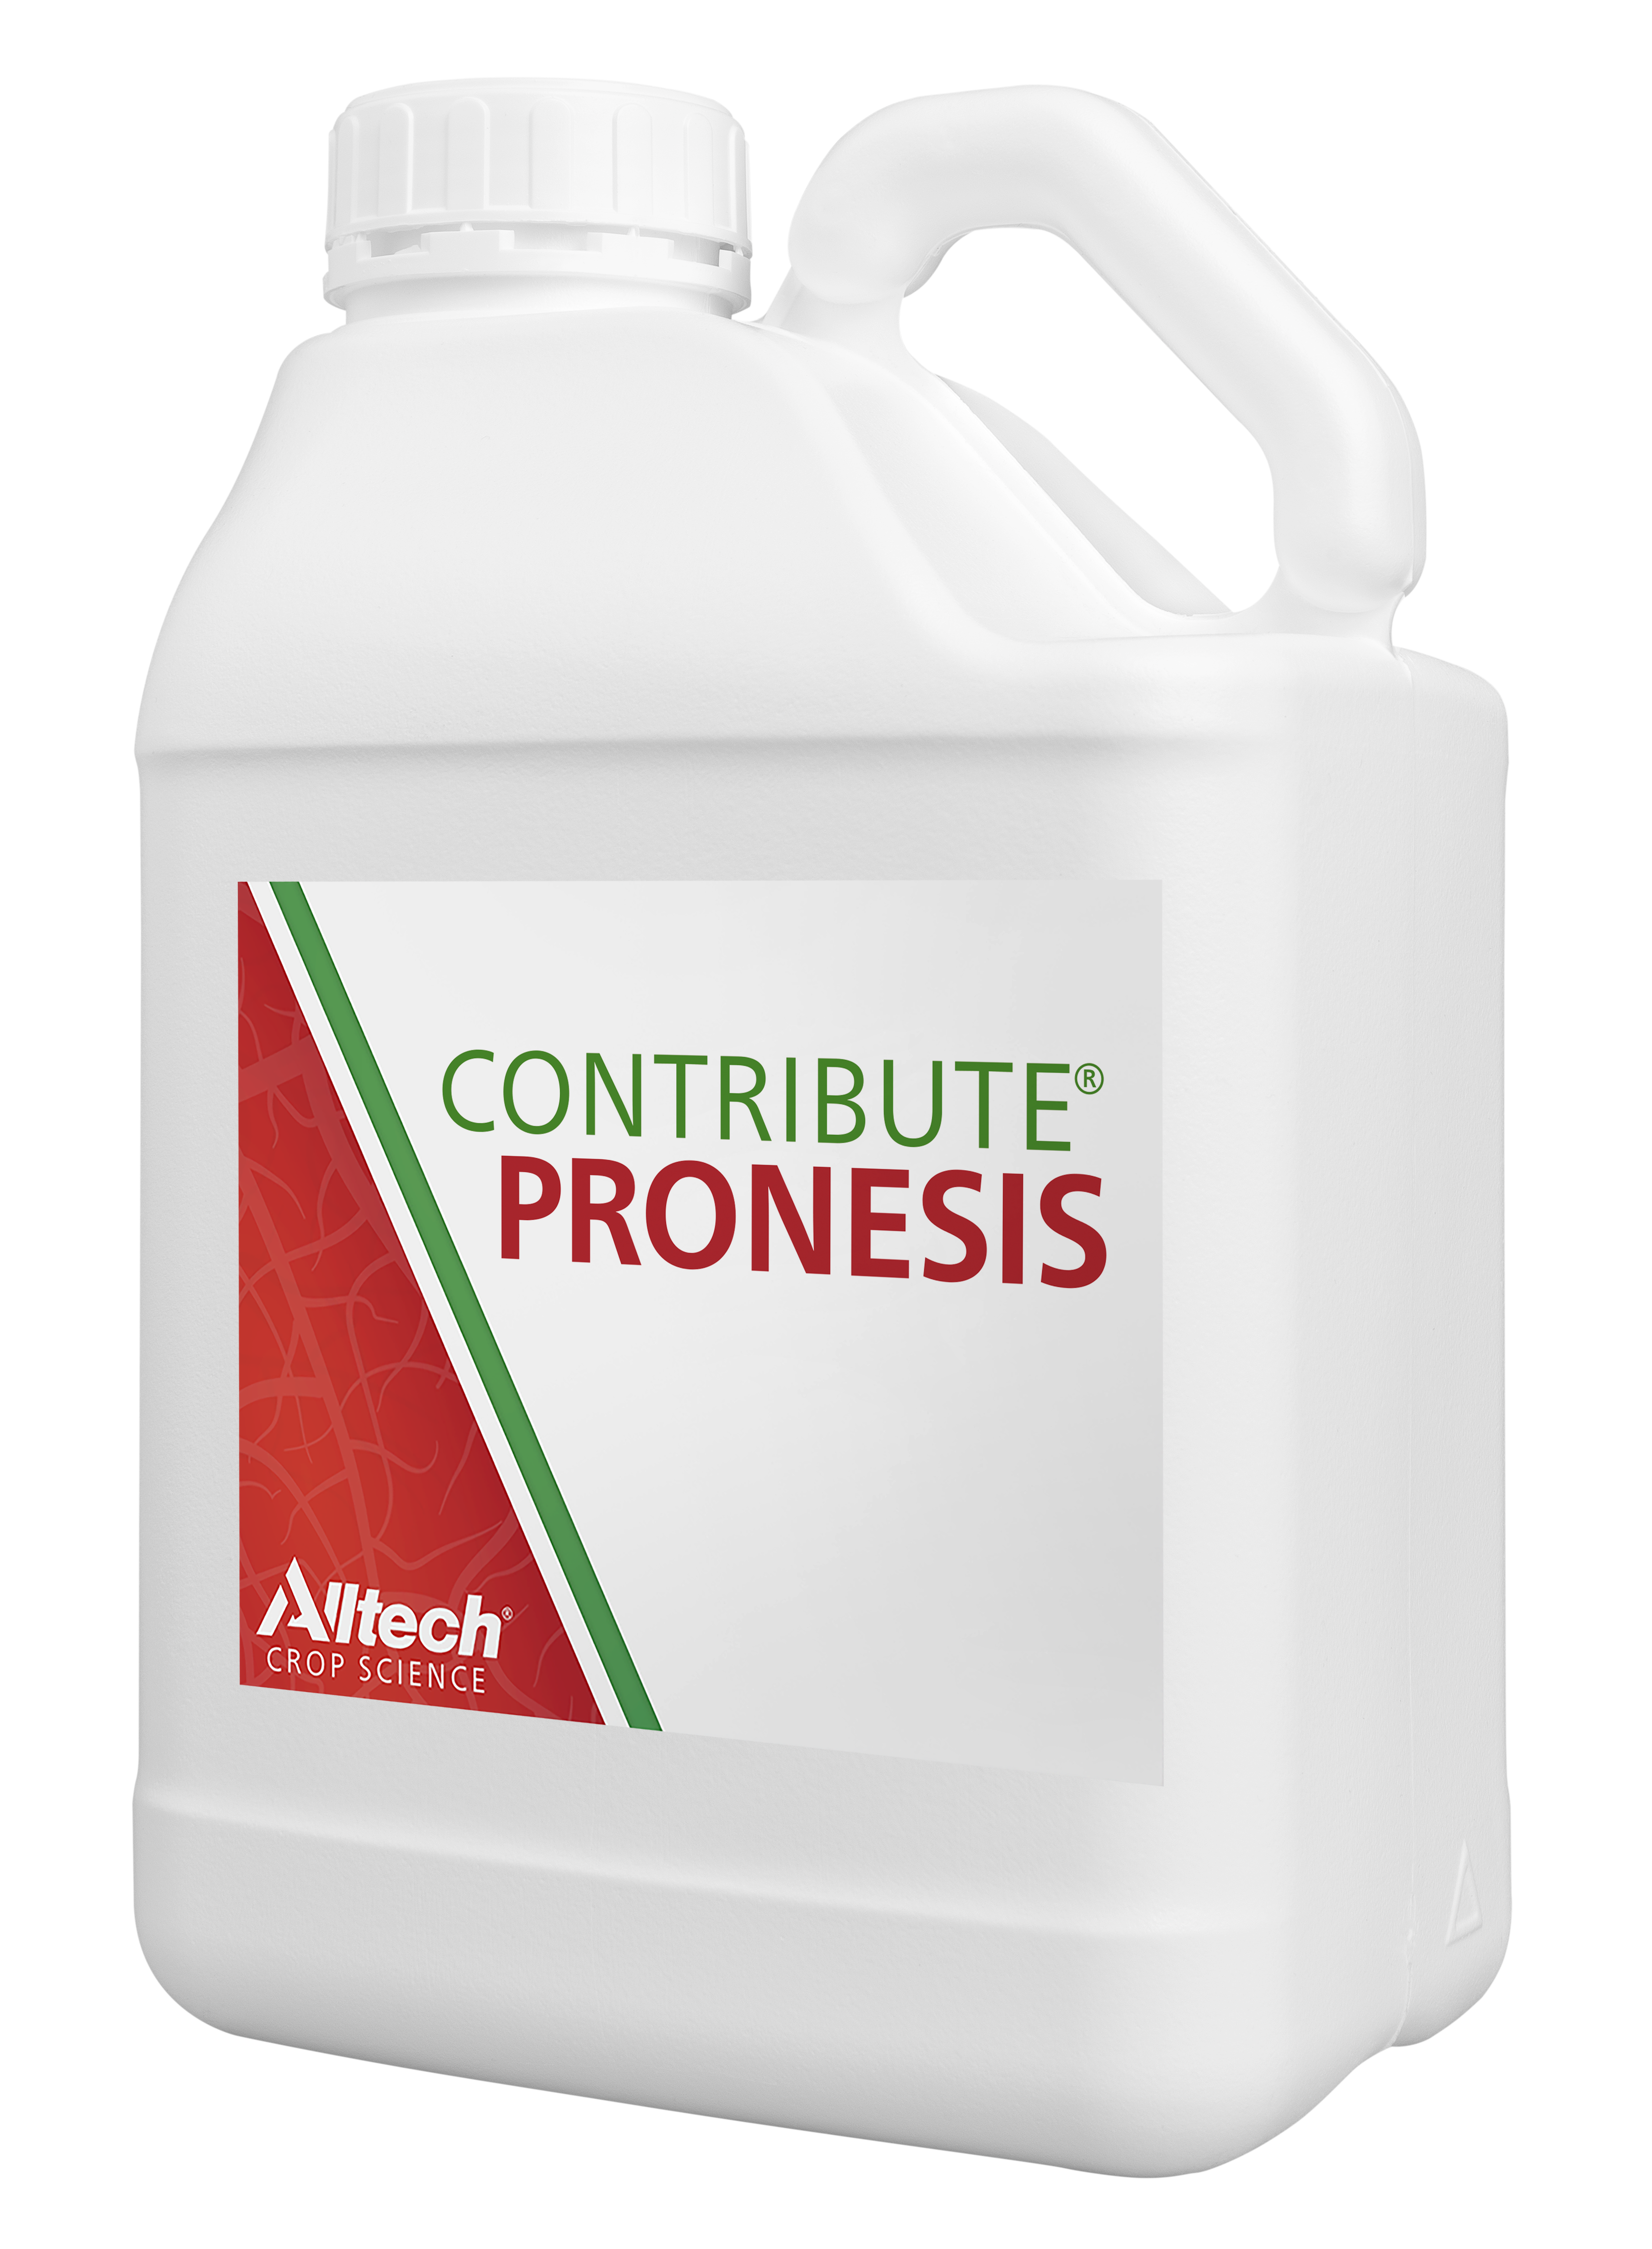 Contribute Pronesis product image